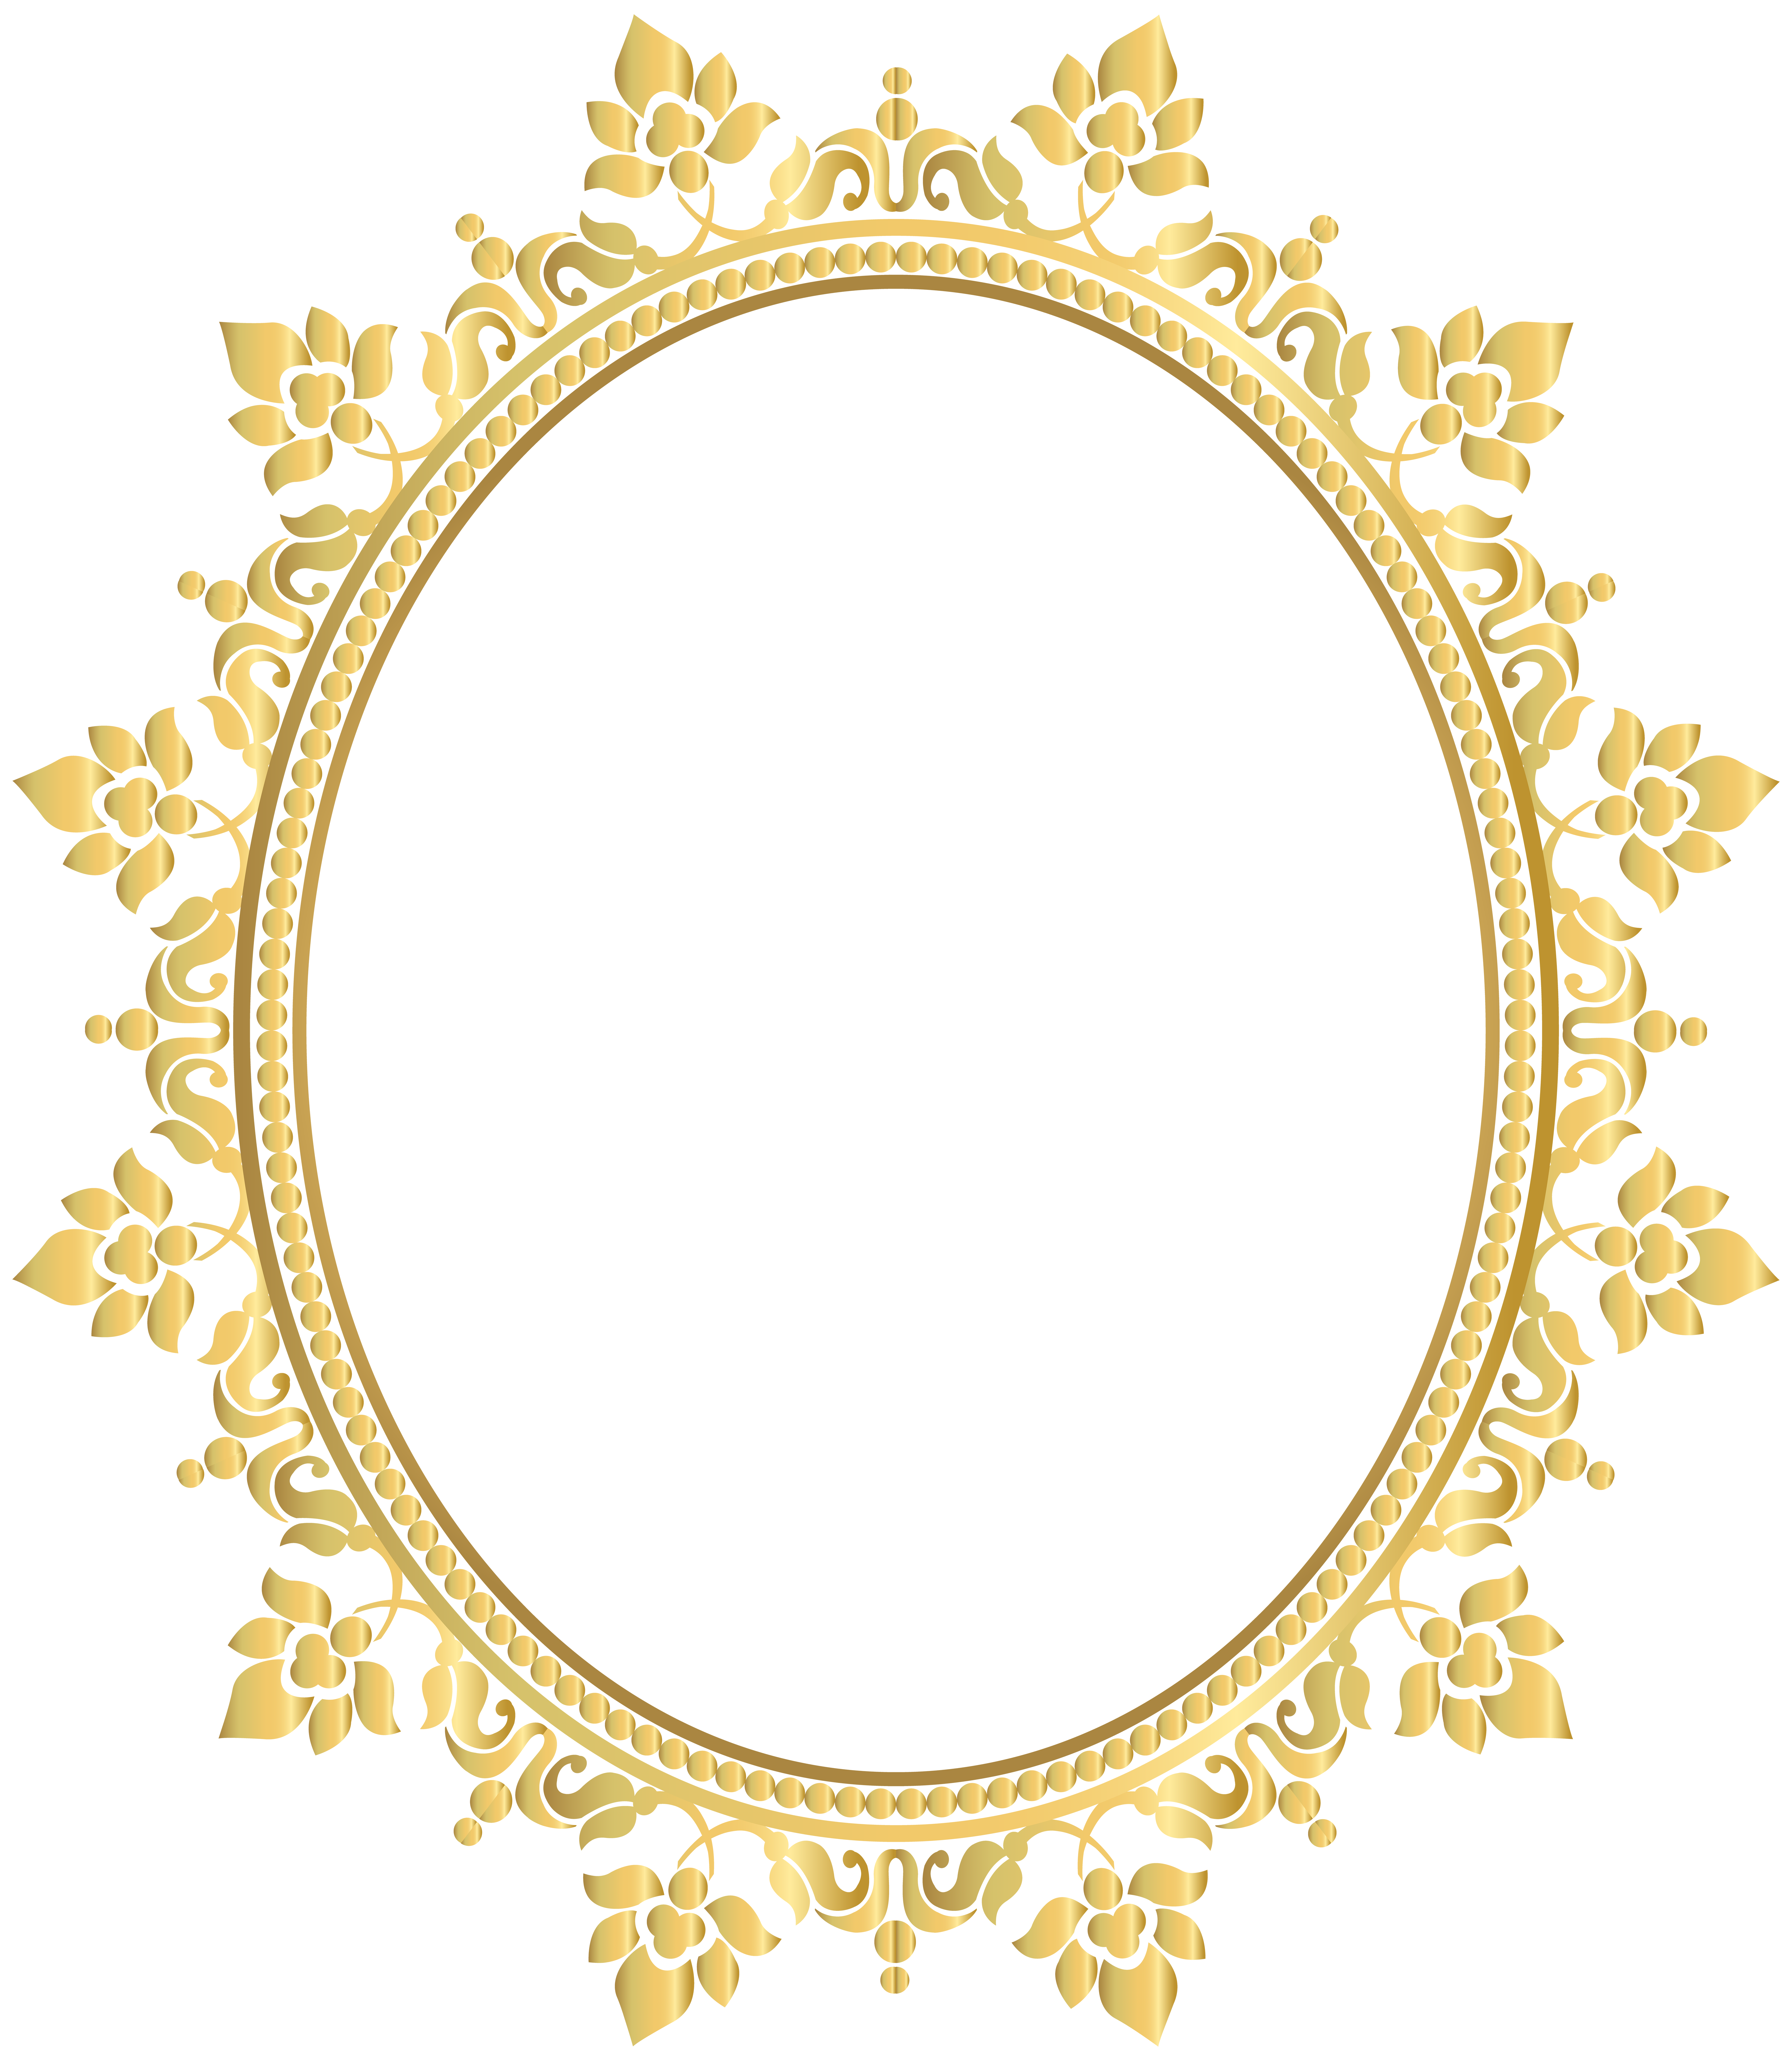 Vines clipart oval. Decorative border frame transparent